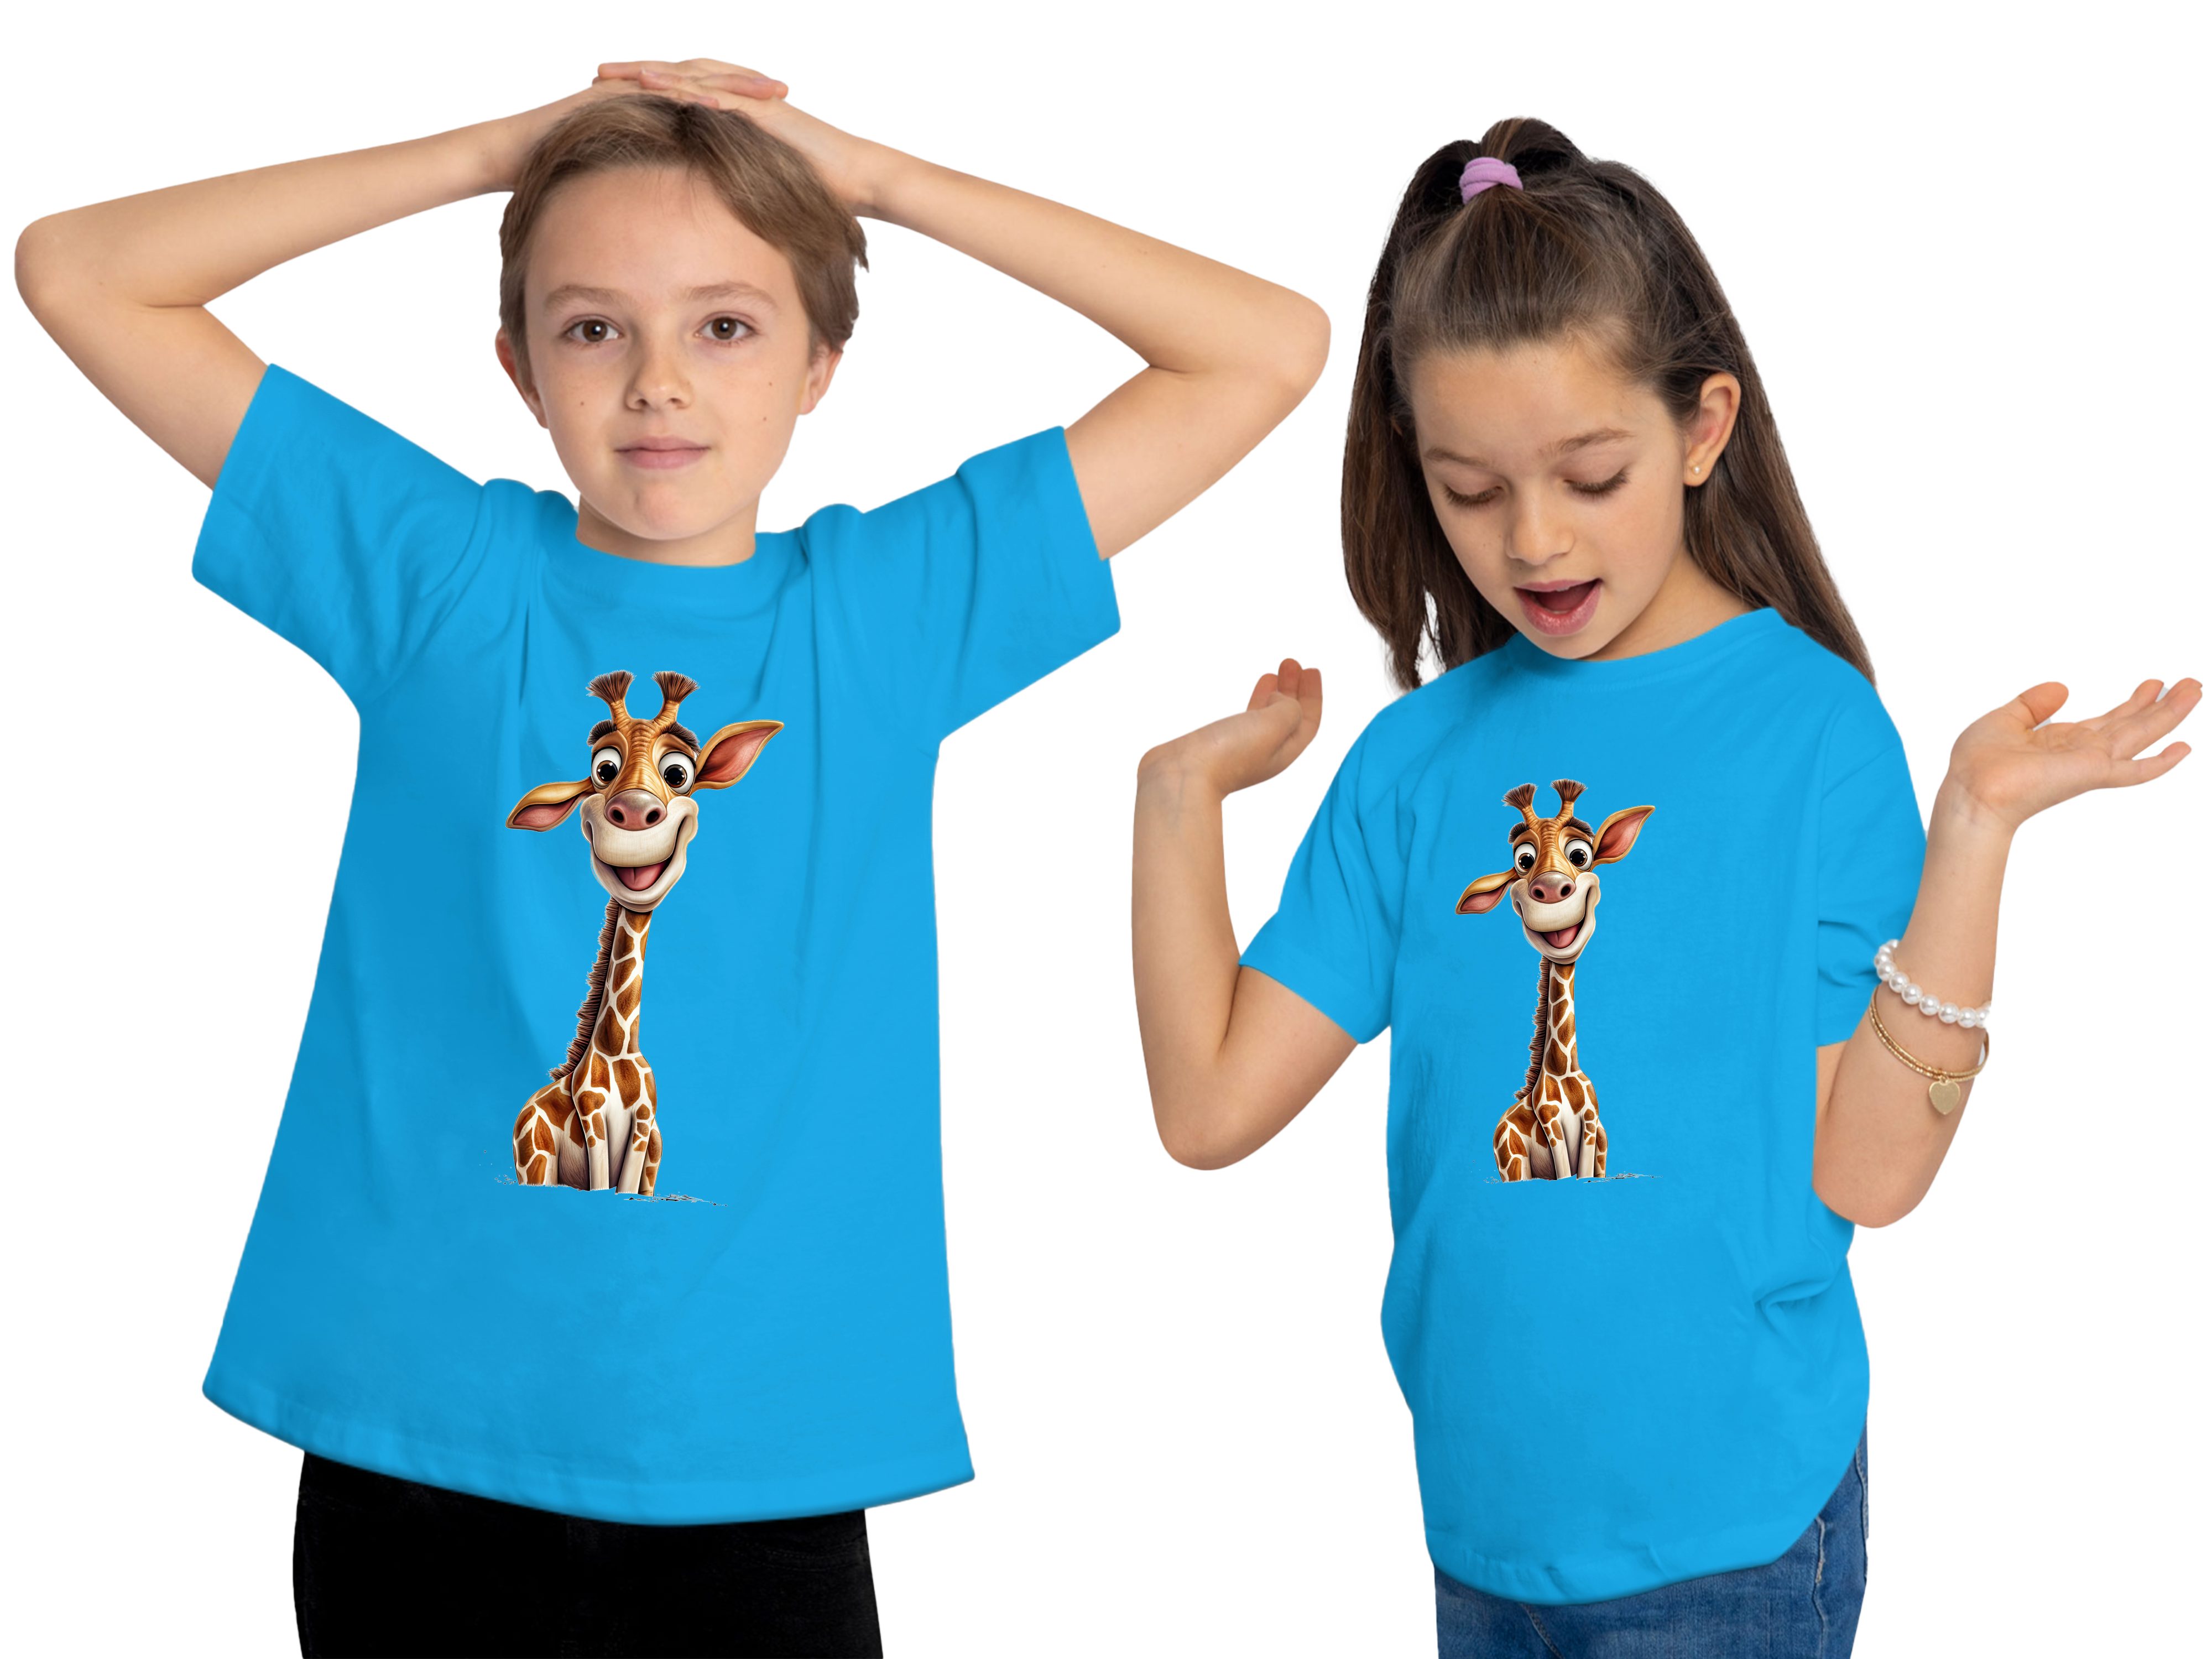 MyDesign24 T-Shirt Kinder Wildtier bedruckt Giraffe Aufdruck, - i273 Baumwollshirt Shirt aqua Baby blau mit Print